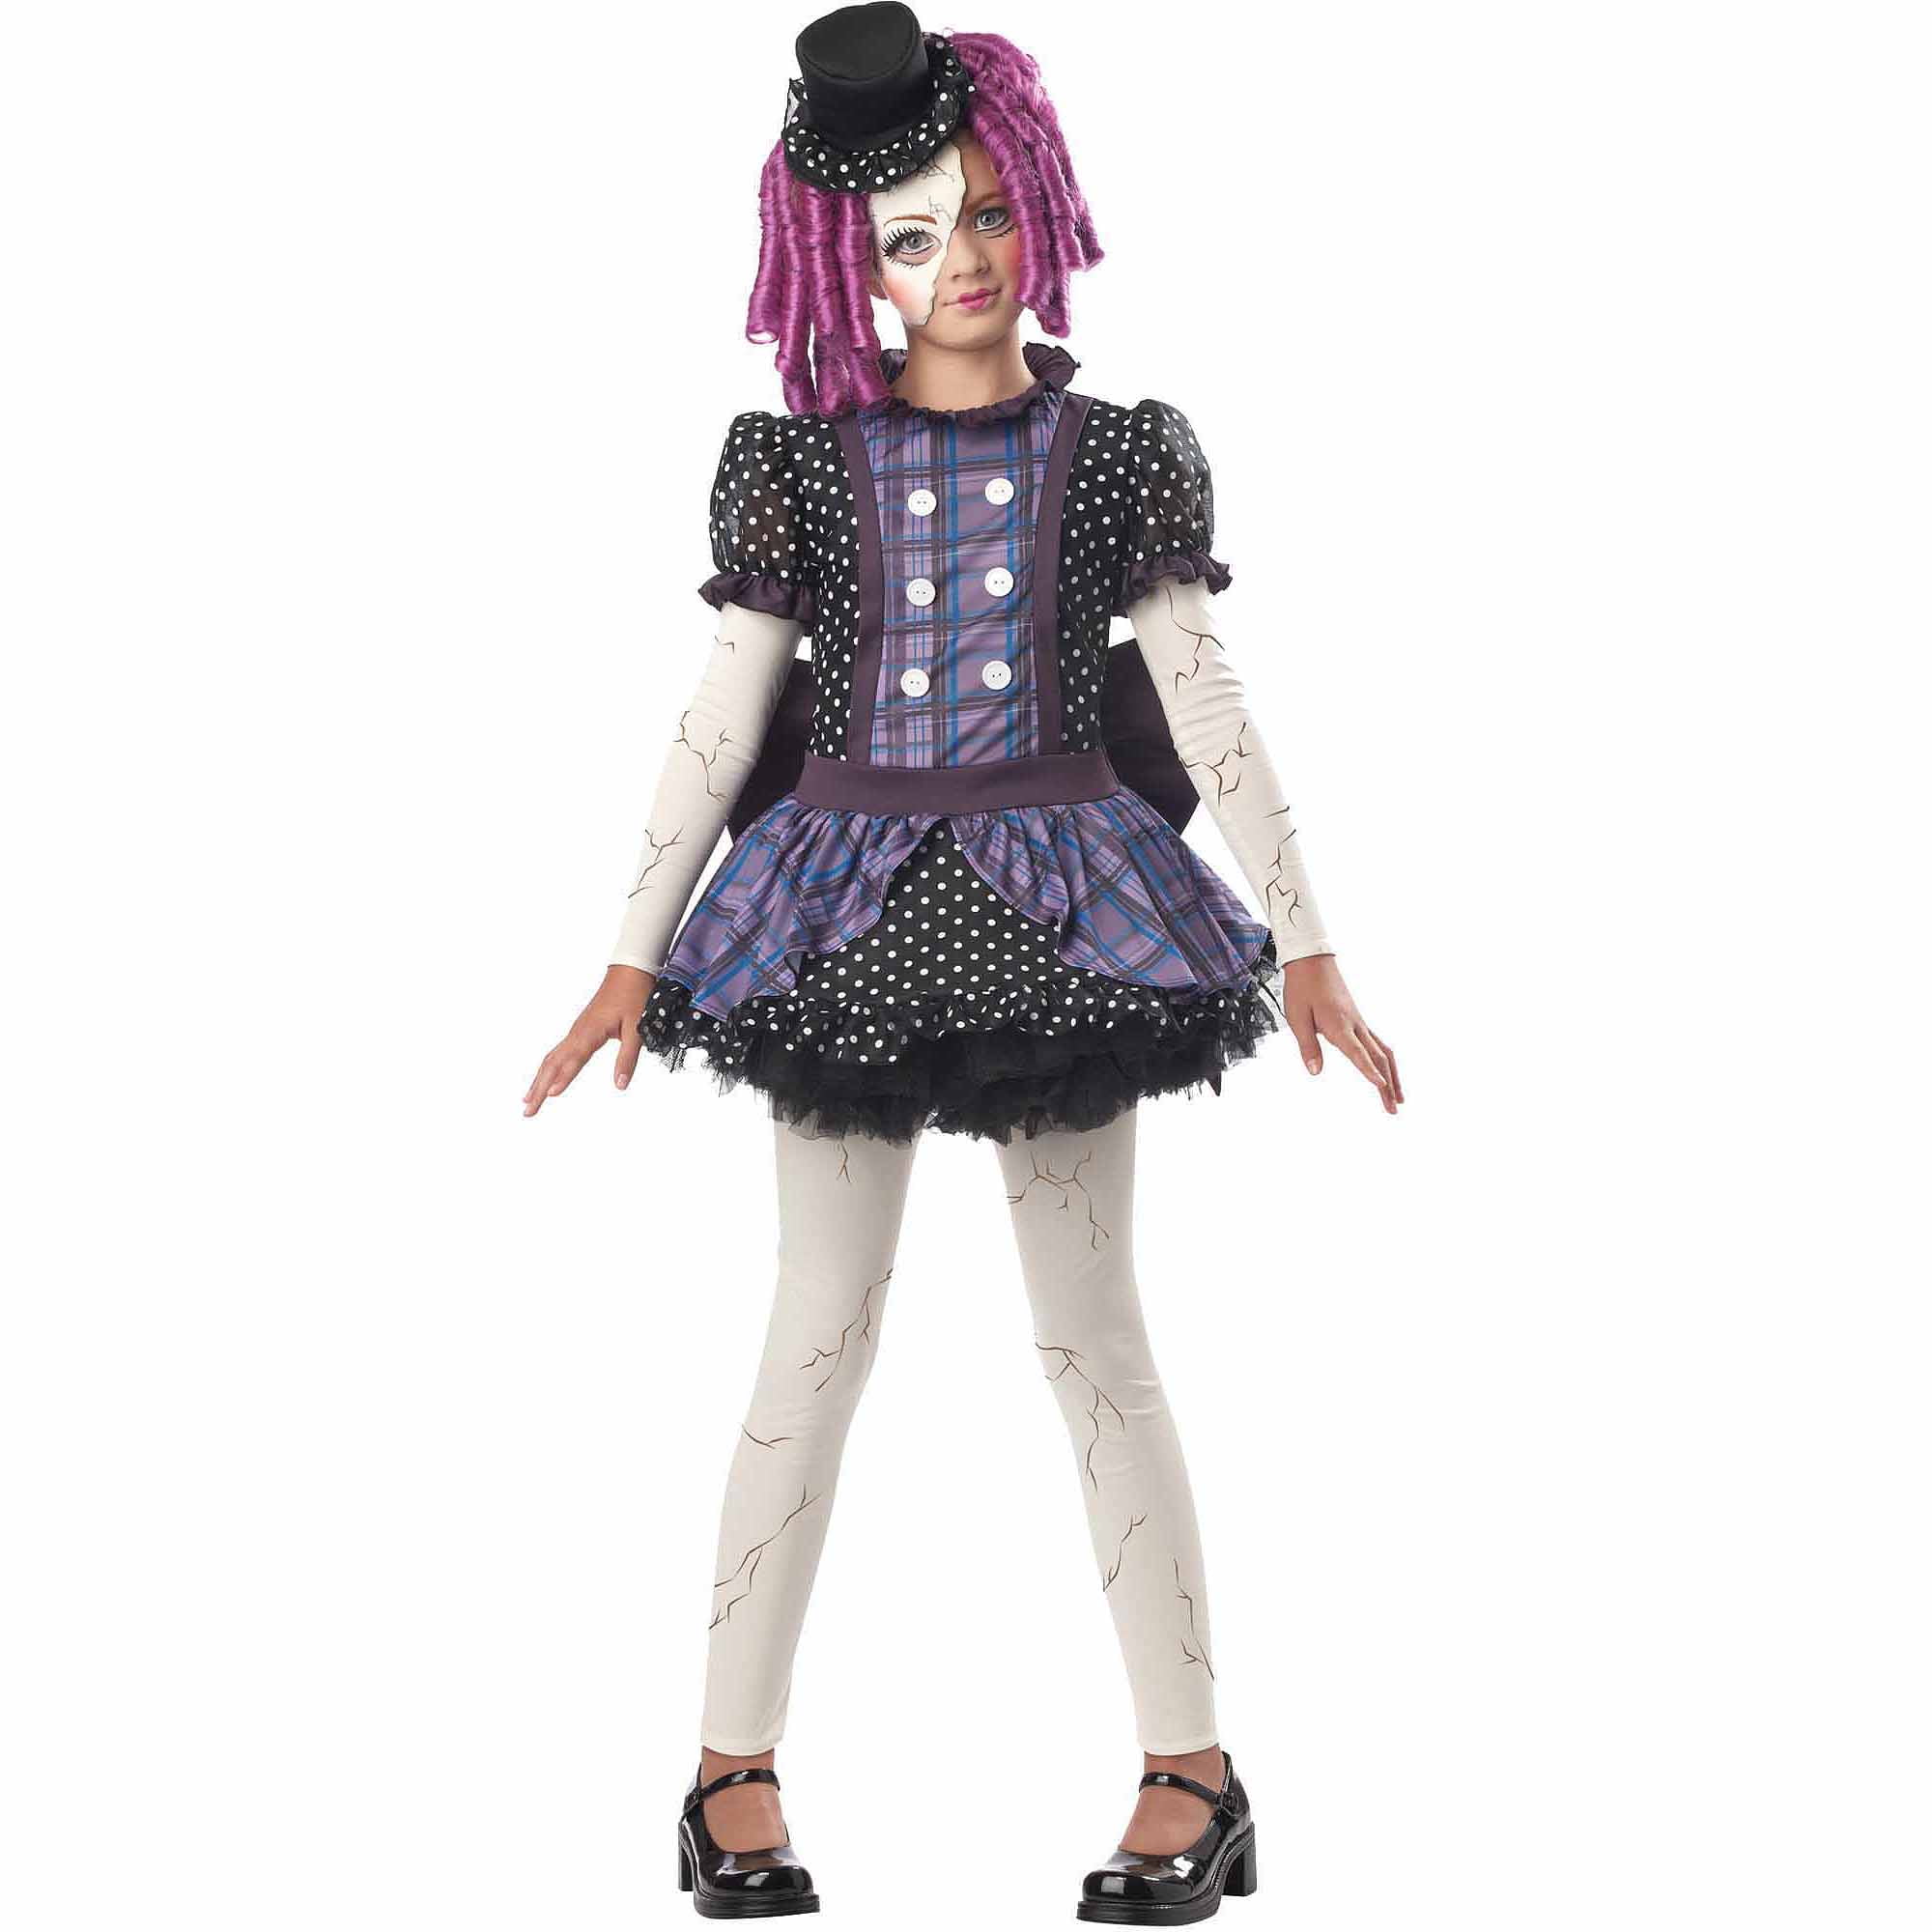 Broken Doll Child Halloween Costume - Walmart.com